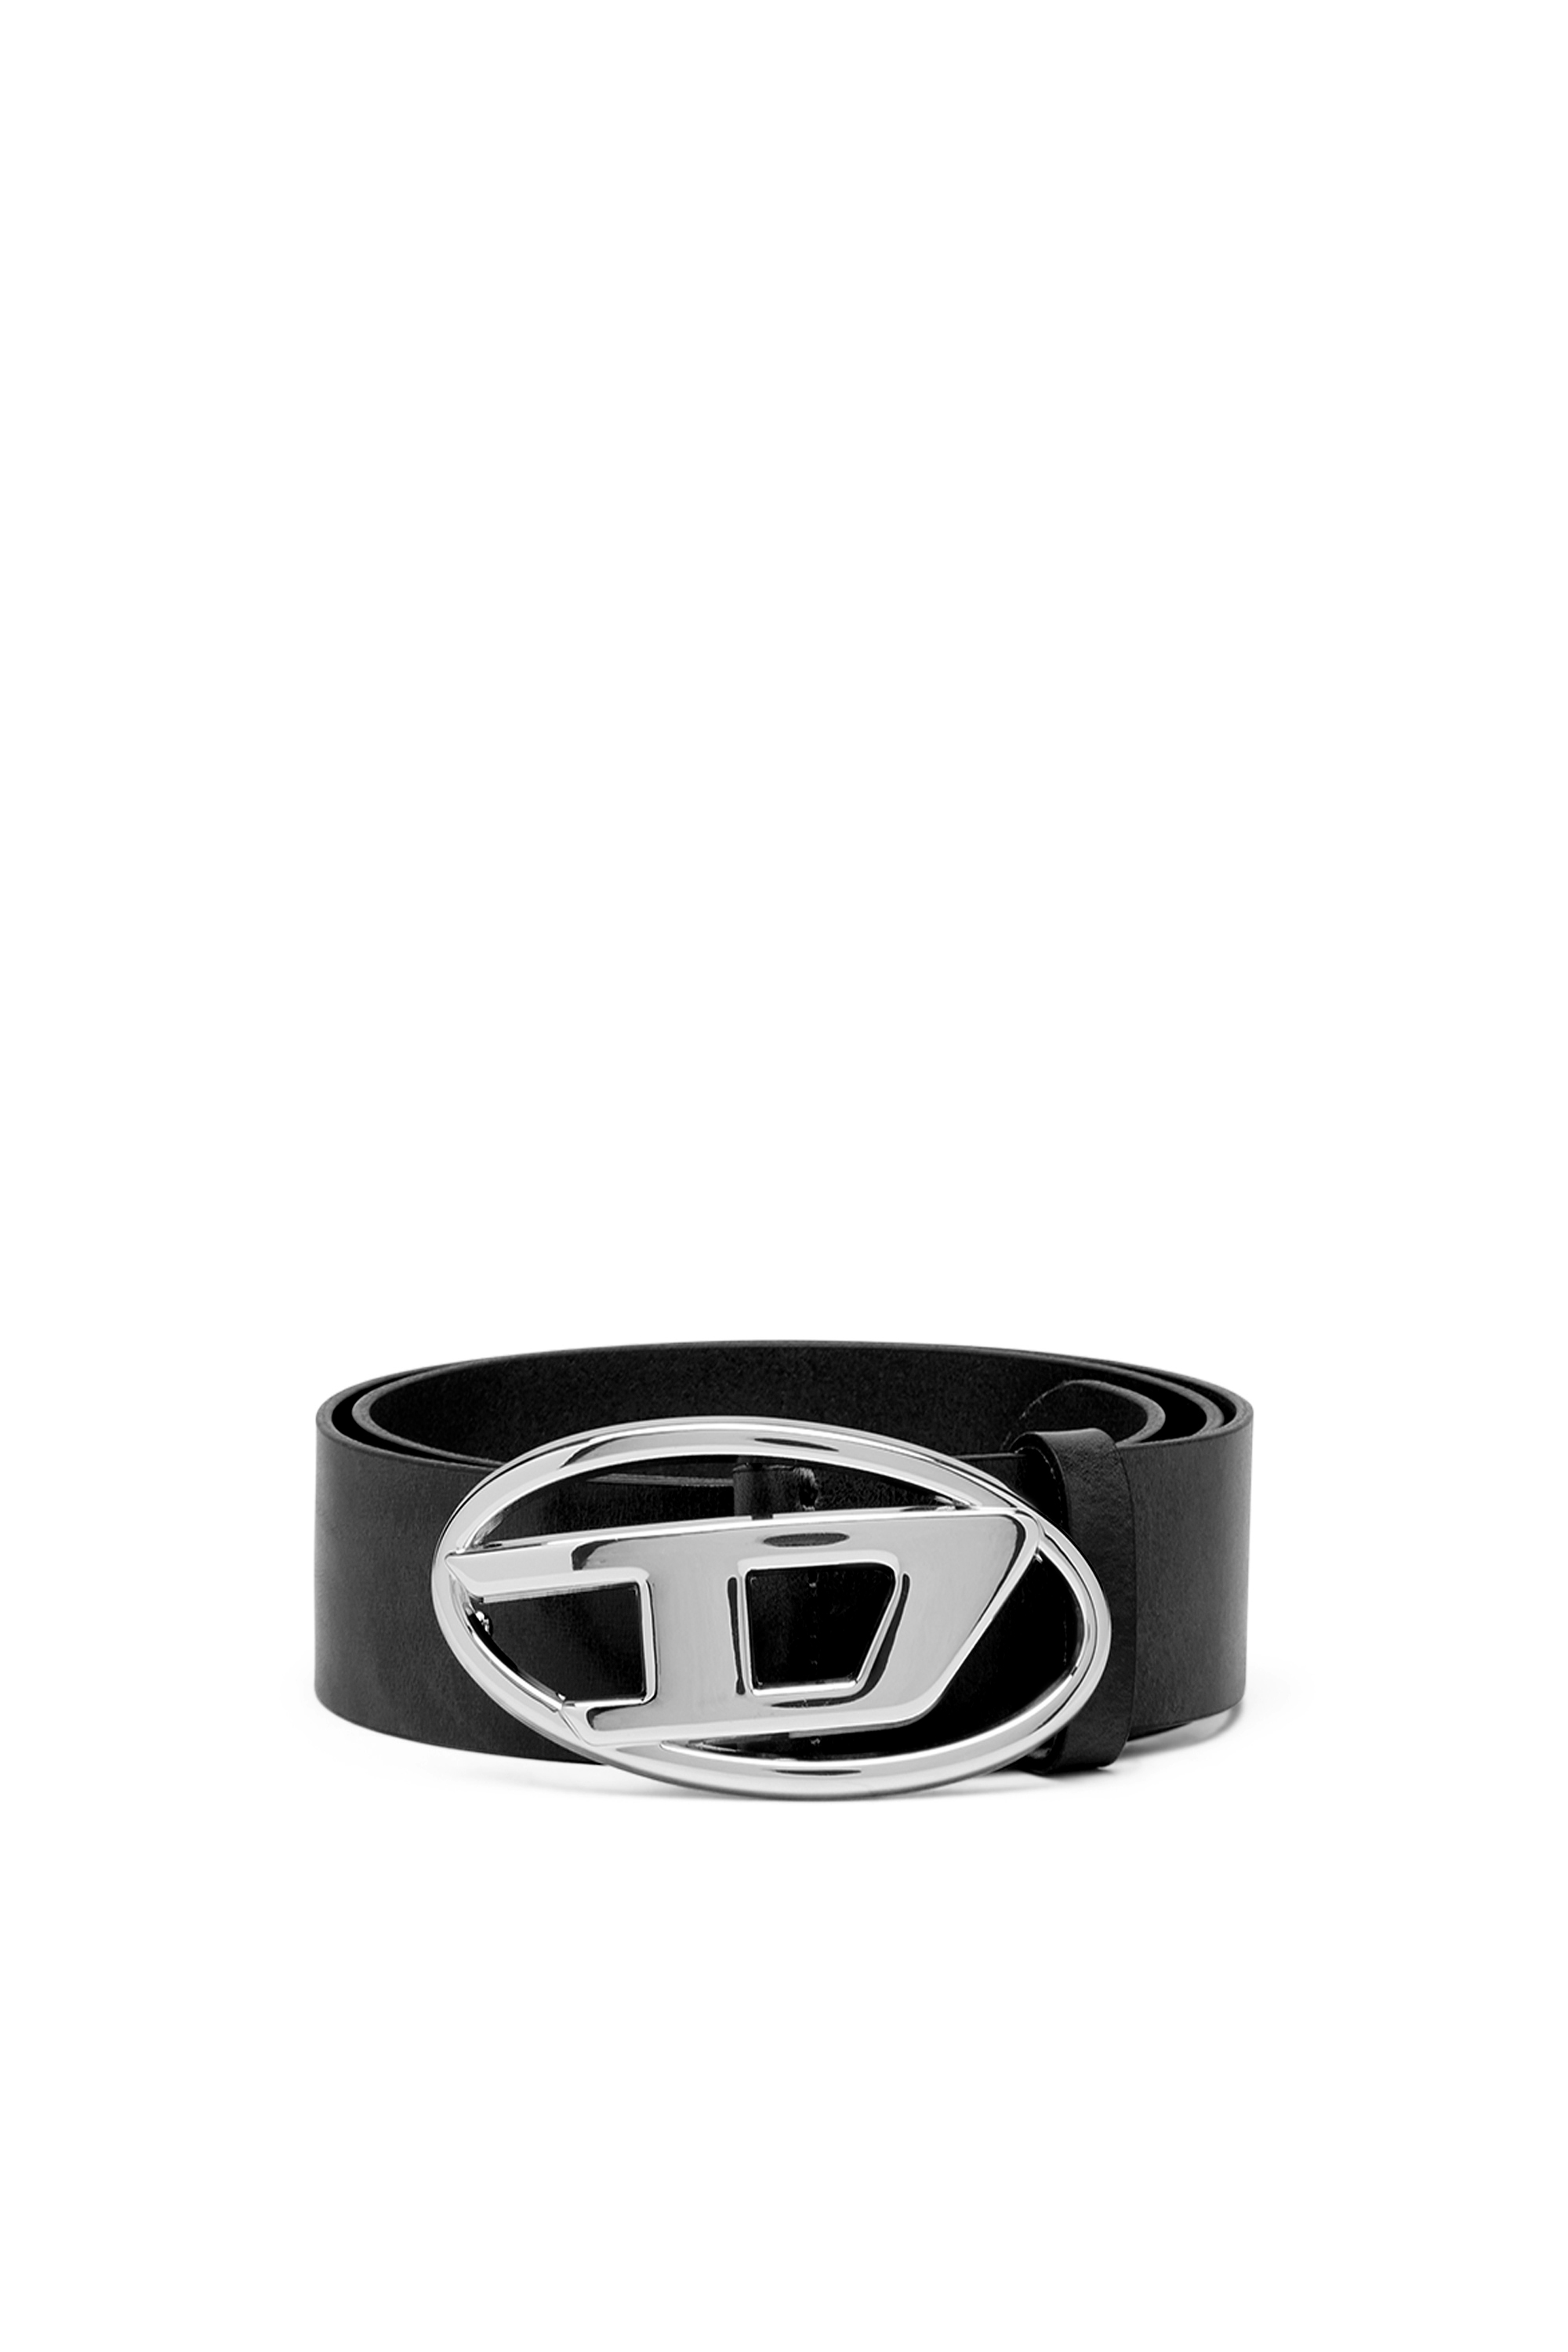 B-1DR W Woman: Belt with D logo buckle | Diesel